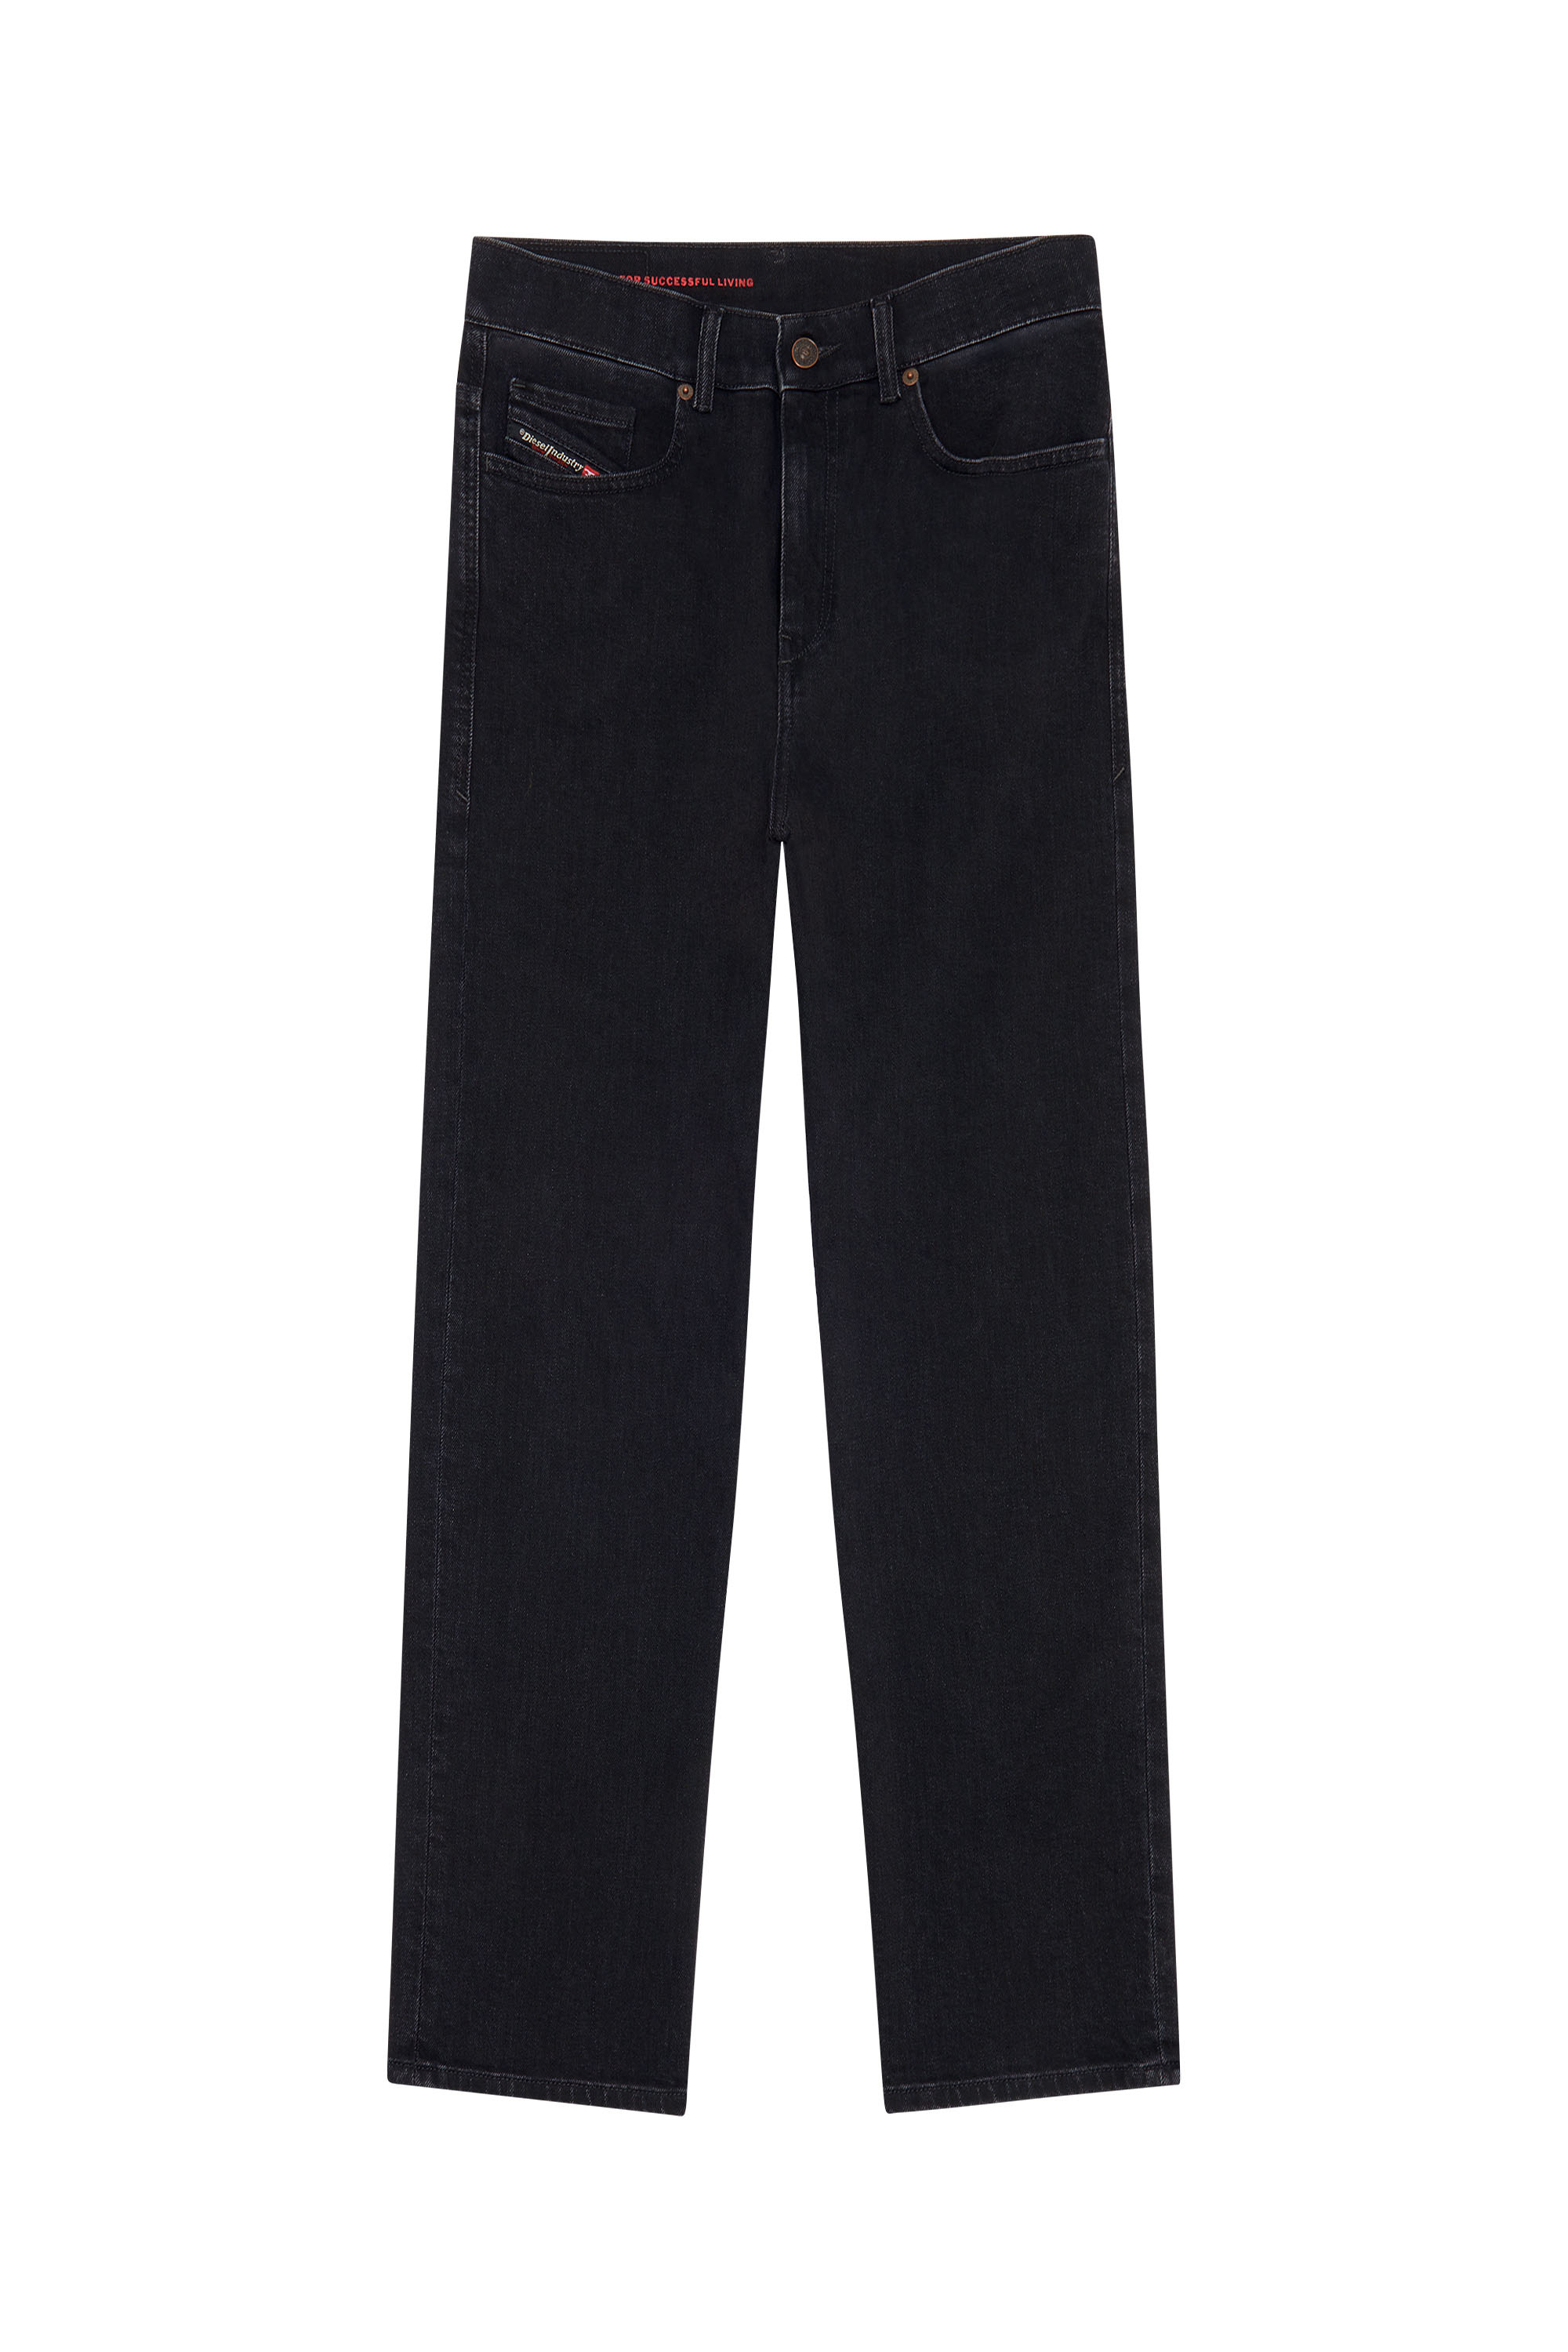 2016 D-AIR Z9C25 Boyfriend Jeans, Black/Dark grey - Jeans